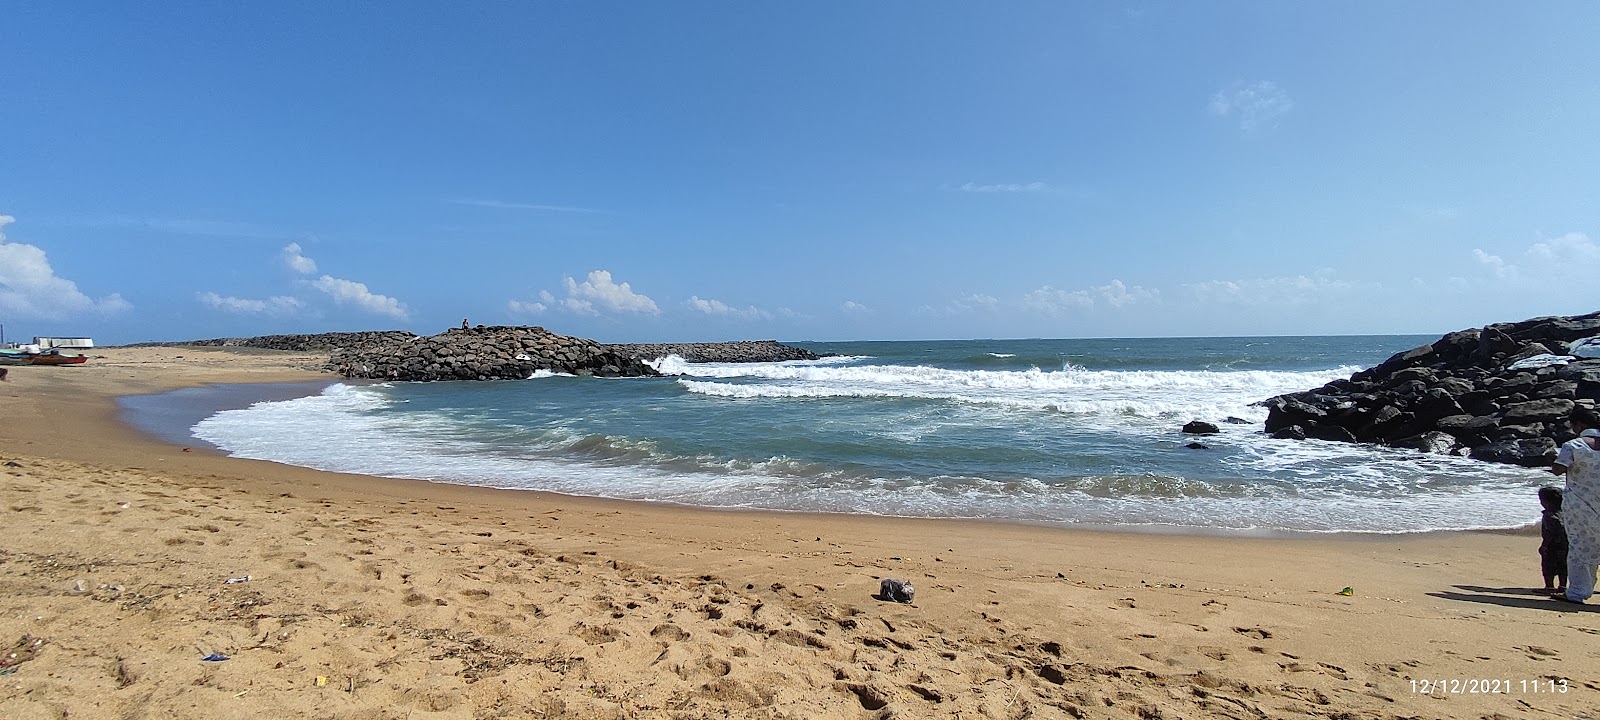 Ennore Thazankuppam Breakwater Beach View'in fotoğrafı parlak kum yüzey ile